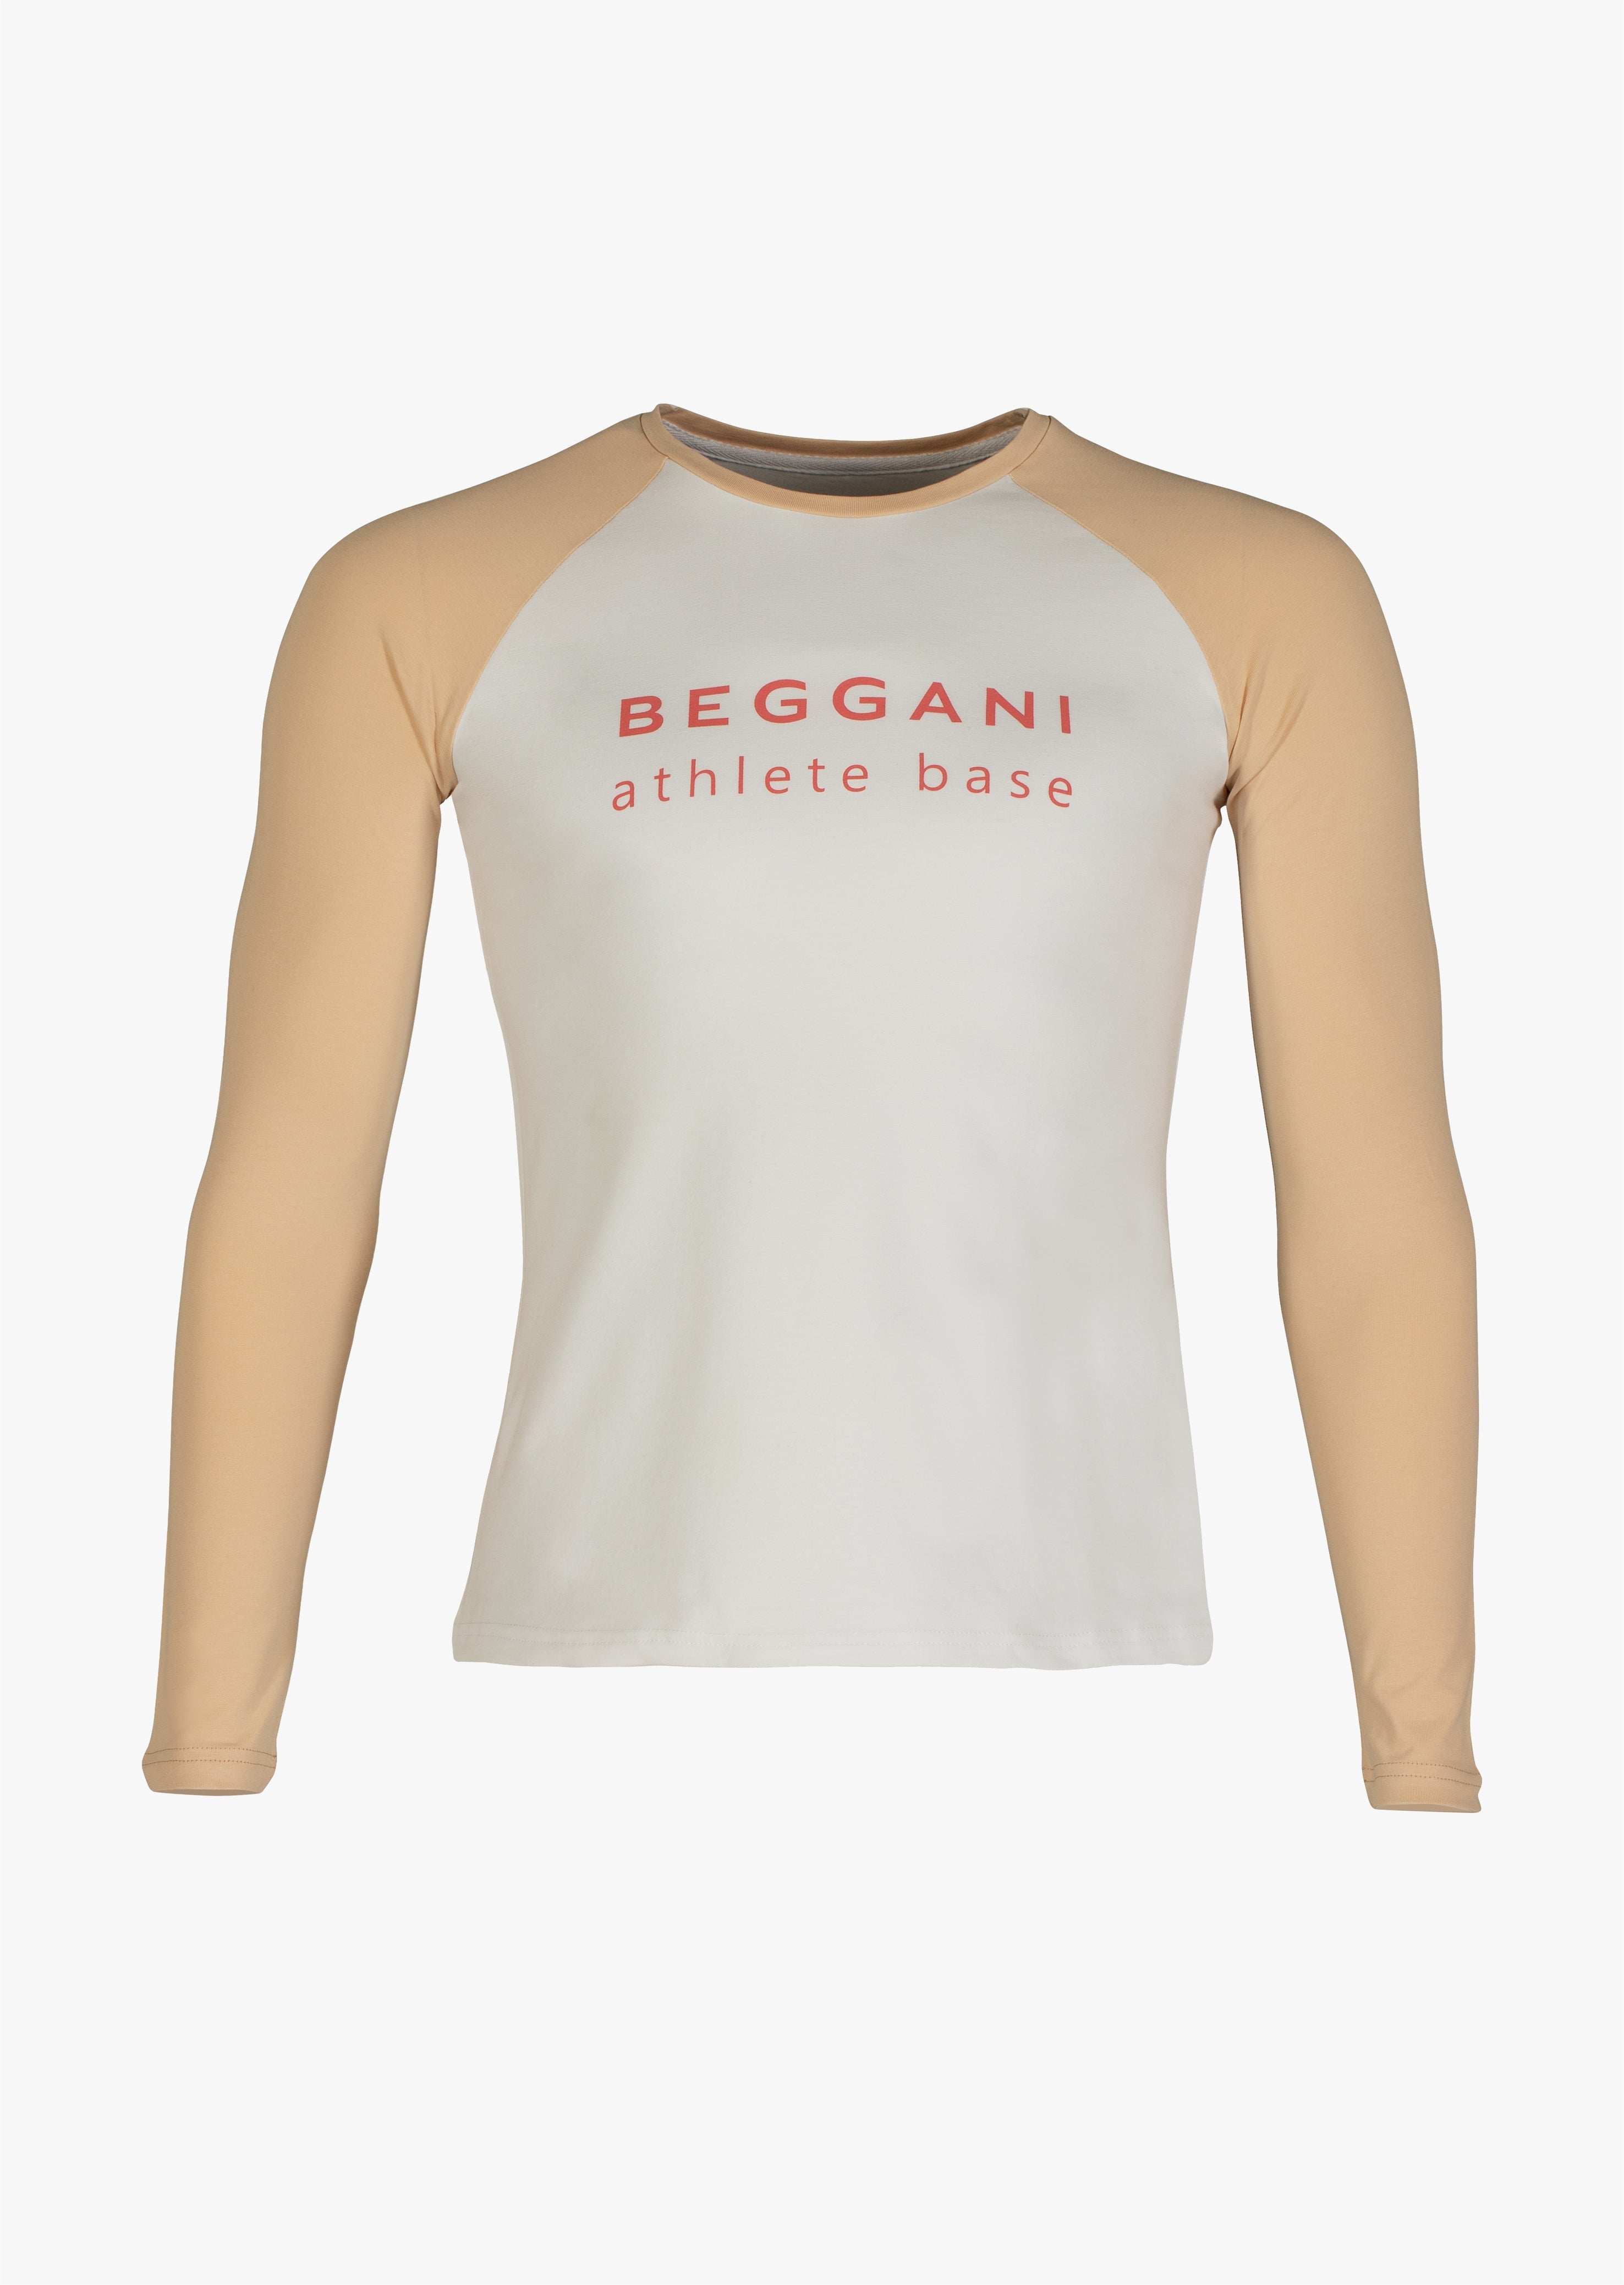 Women's Long-sleeved T-shirt BEGGANI athlete base